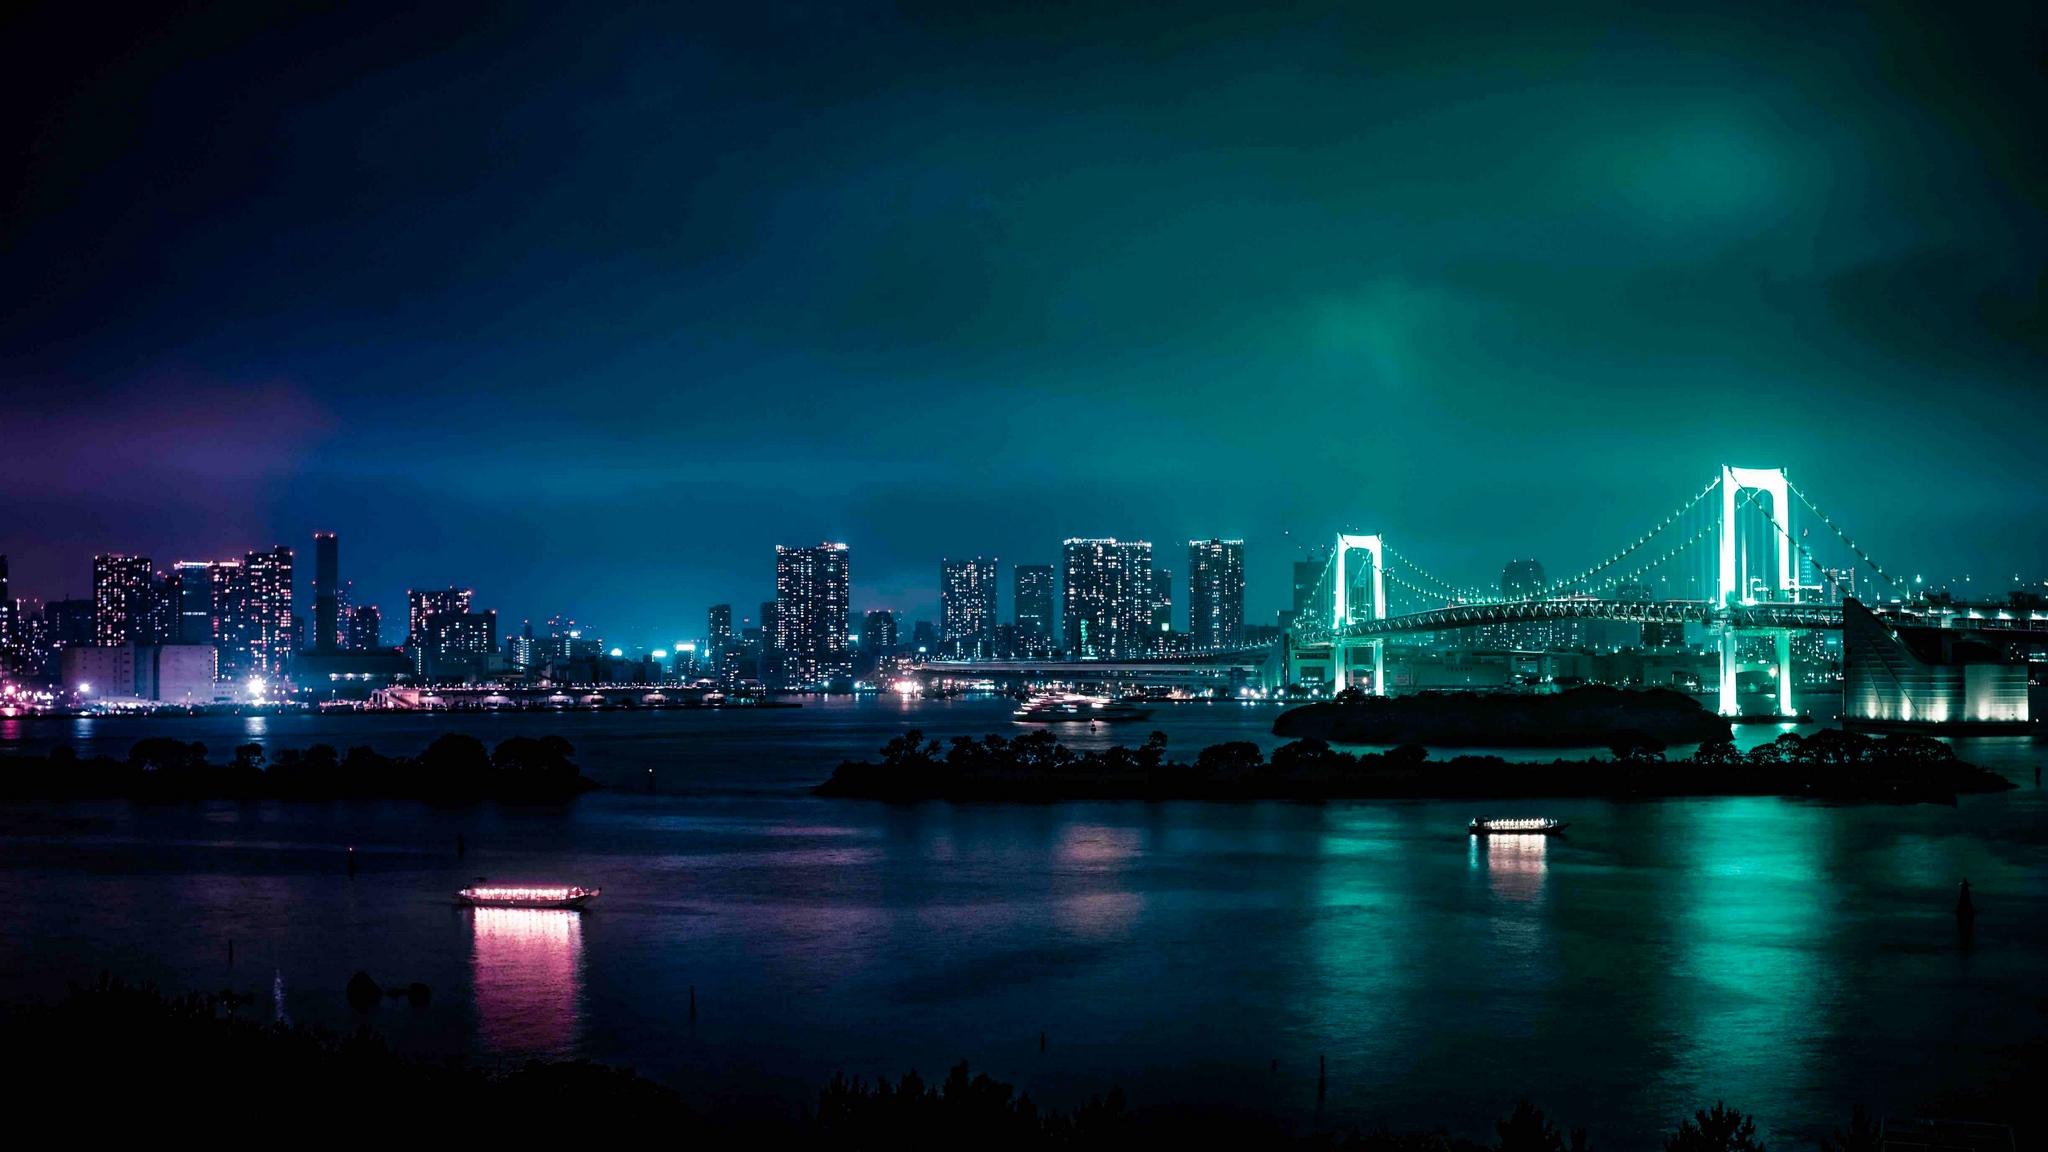 Download wallpaper 2048x1152 minato, japan, night city